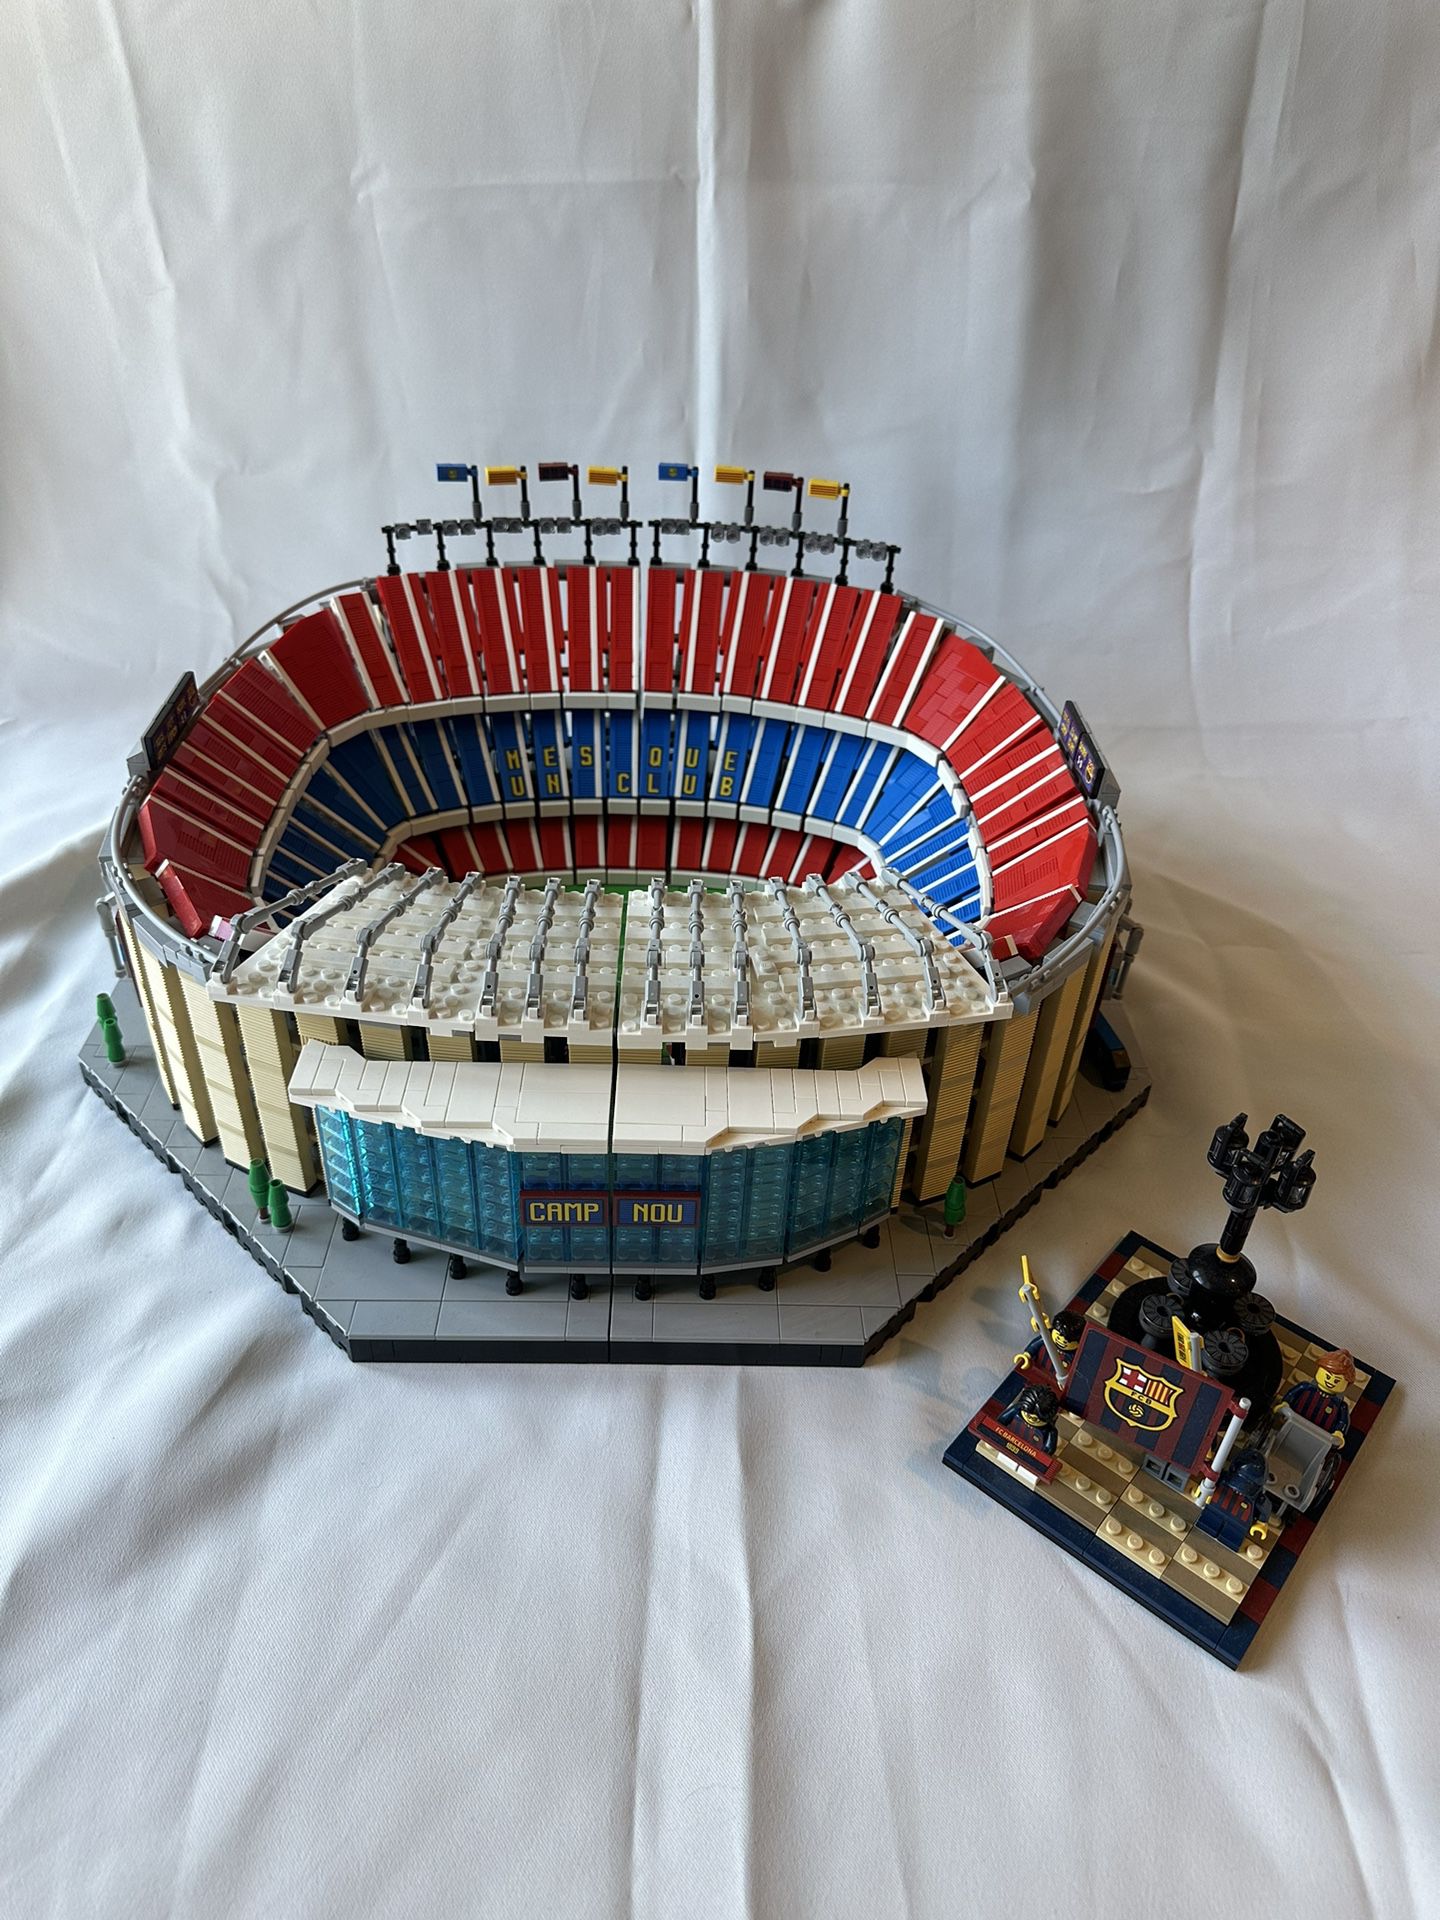 LEGO FC Barcelona Set | Camp Nou Stadium Model